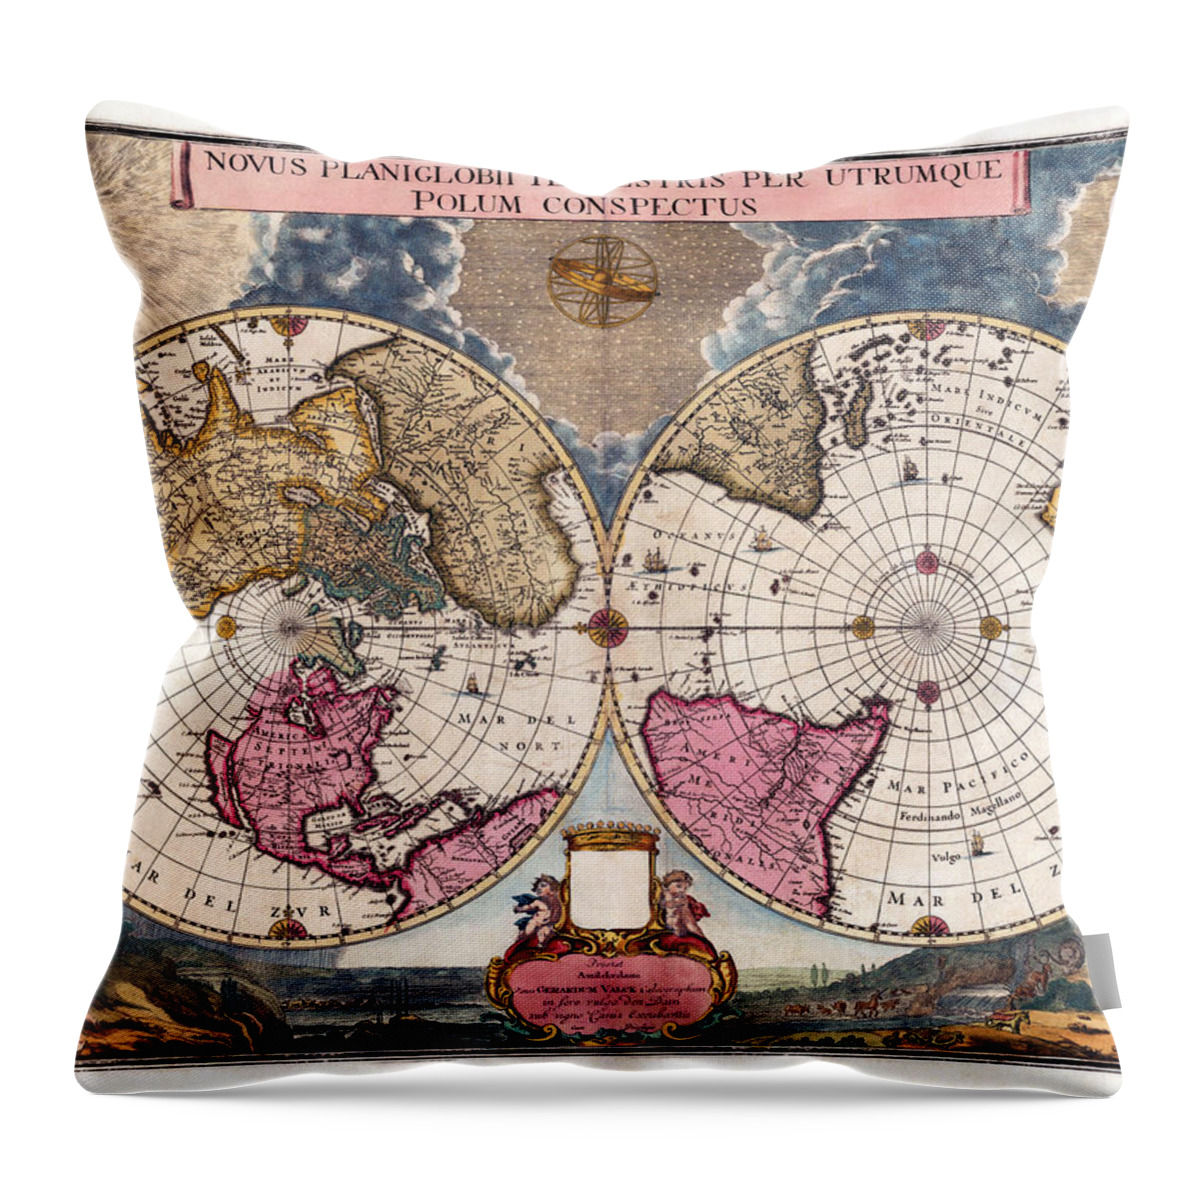 Antique Map Throw Pillow featuring the photograph Antique World Map 1695 Novus Planiglobii Terrestris per Utrumque Polum Conspectus by Karon Melillo DeVega